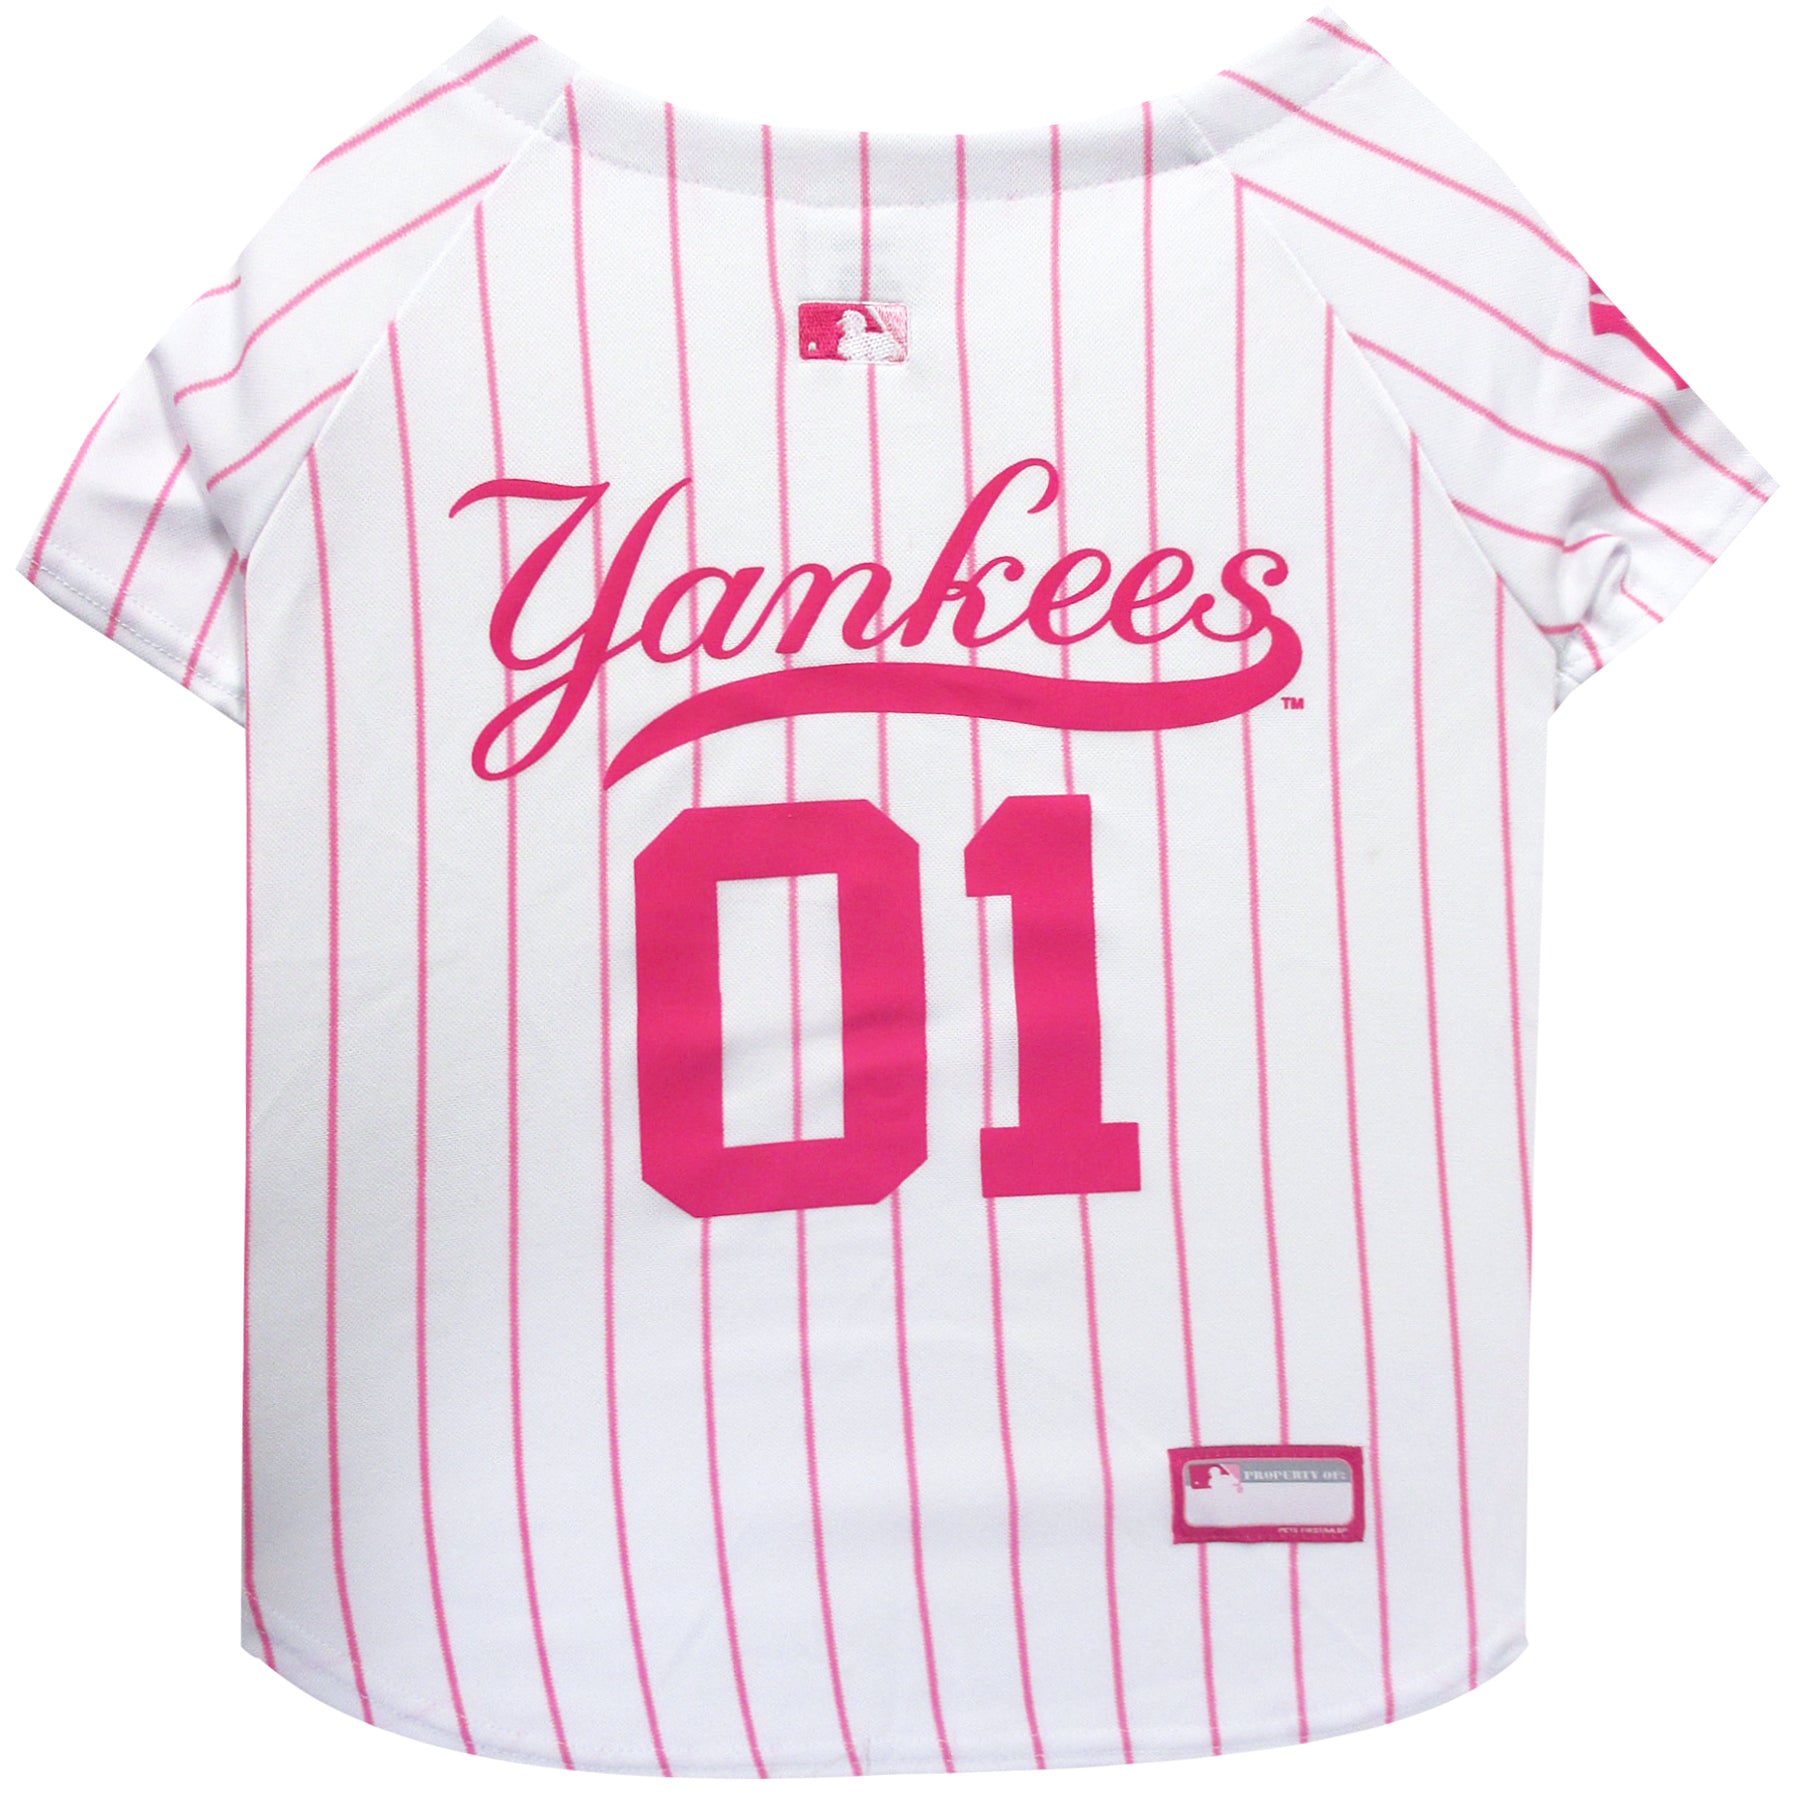 BABW MLB Cubs Brewers Yankees Pink Team Jersey Genuine MLB Merchandise NWT